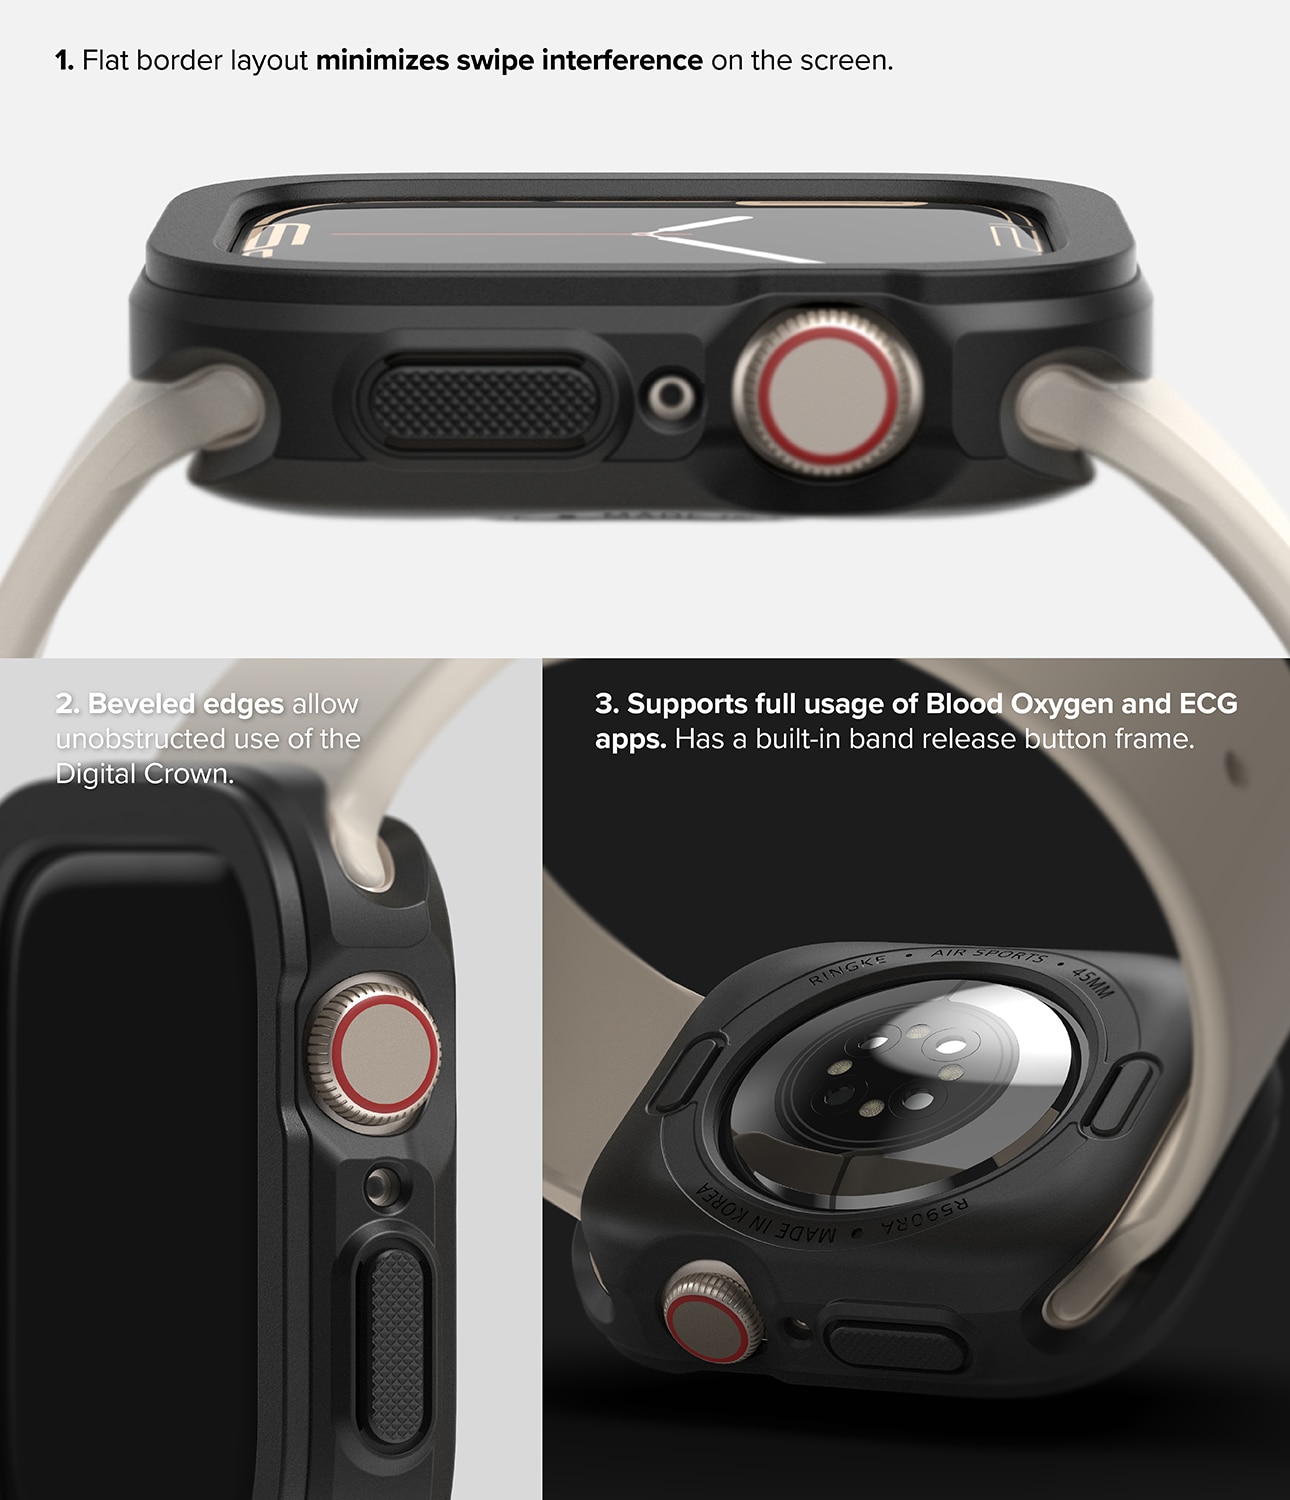 Apple Watch SE 40mm Air Sports Case Black